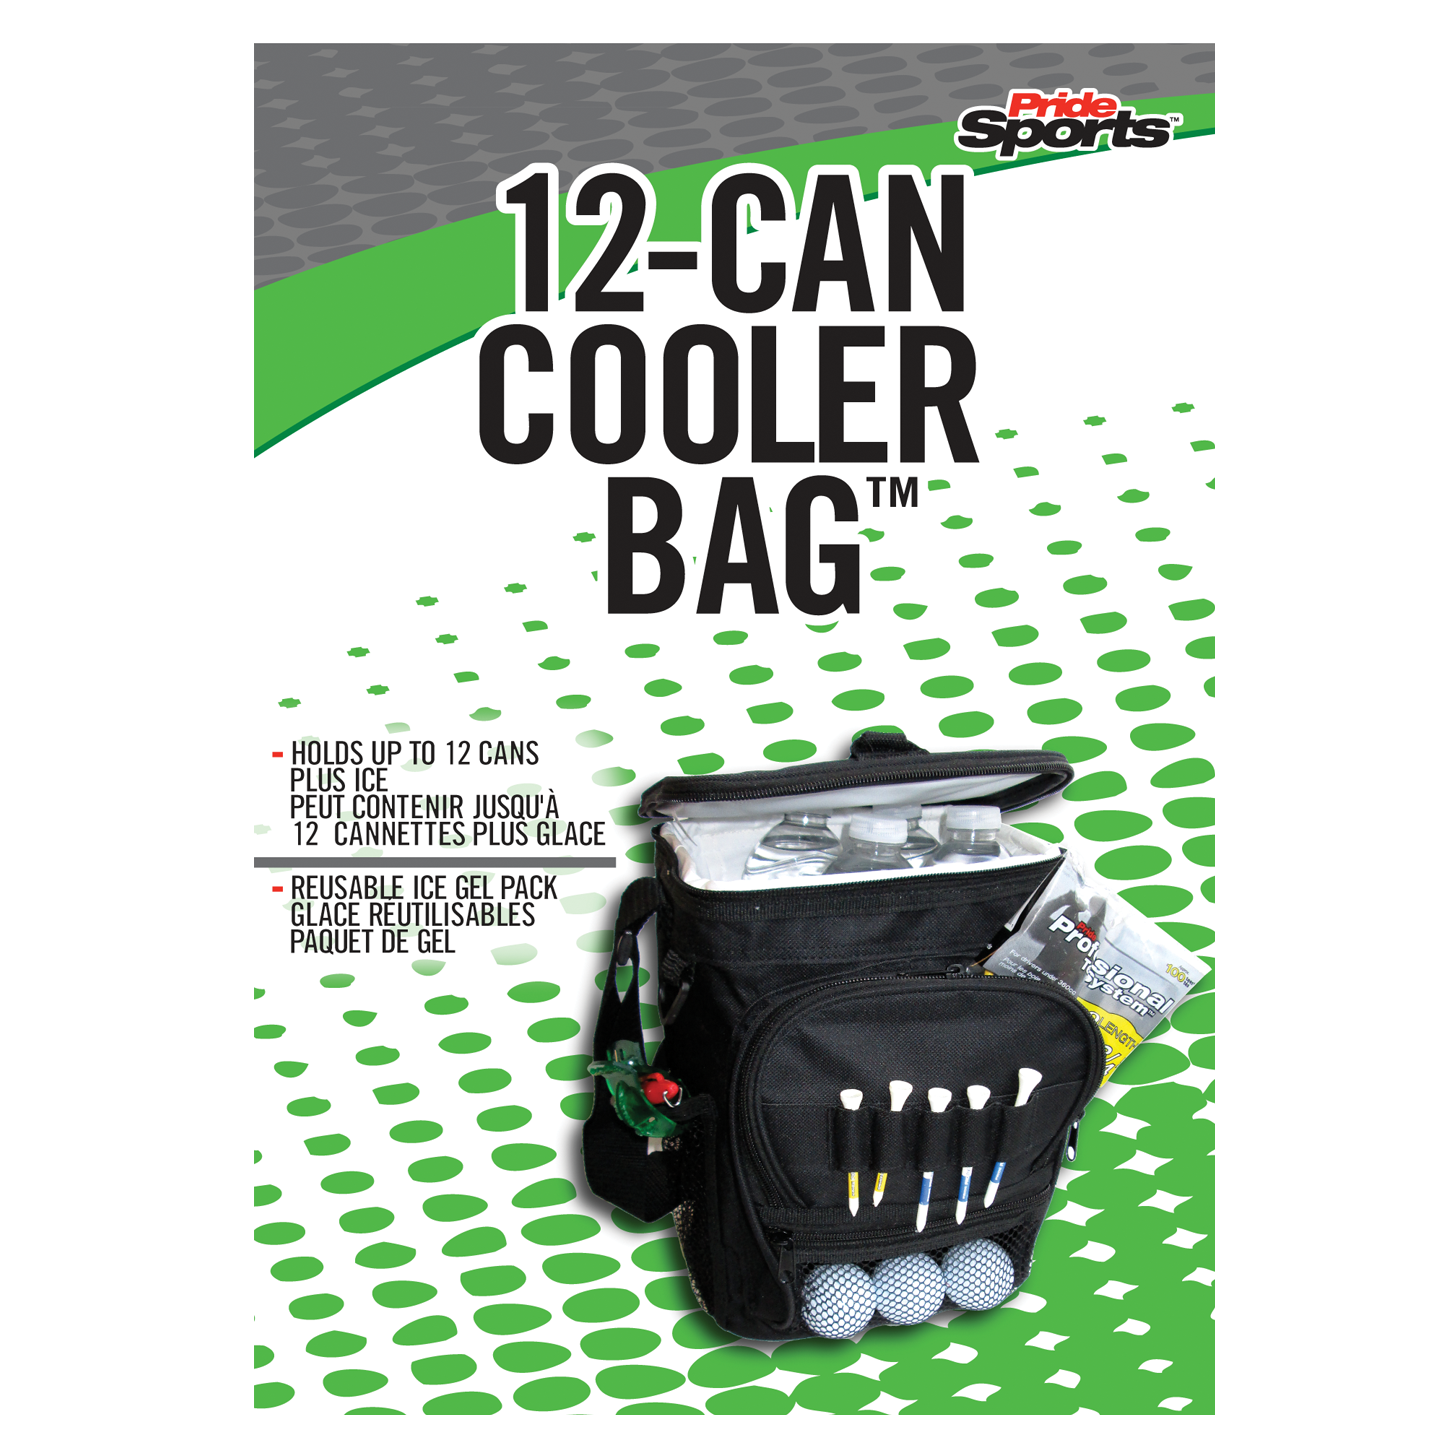 PrideSports Cooler Bag - image 1 of 9